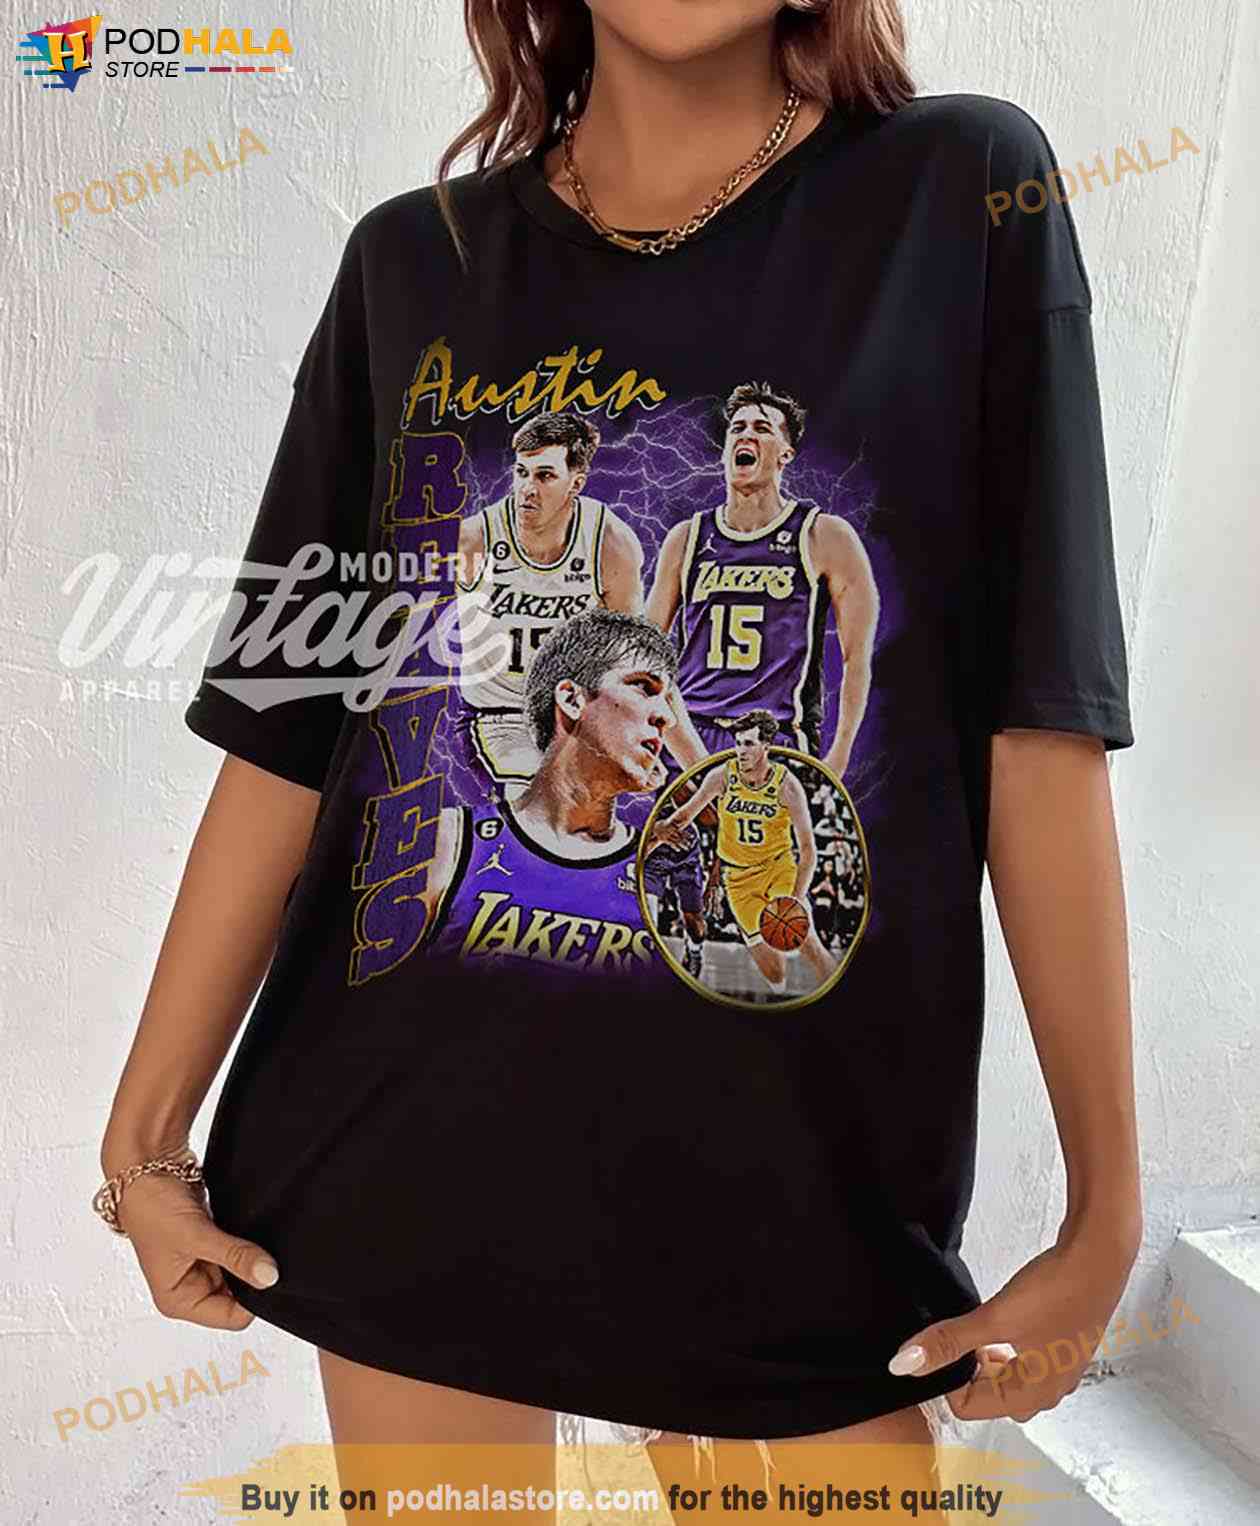 Vintage 90s Basketball Bootleg Style T-Shirt, AUSTIN REAVES Graphic Tee,  Austin Reaves Shirt, Retro Basketball Shirt, Unisex Oversized Shirt